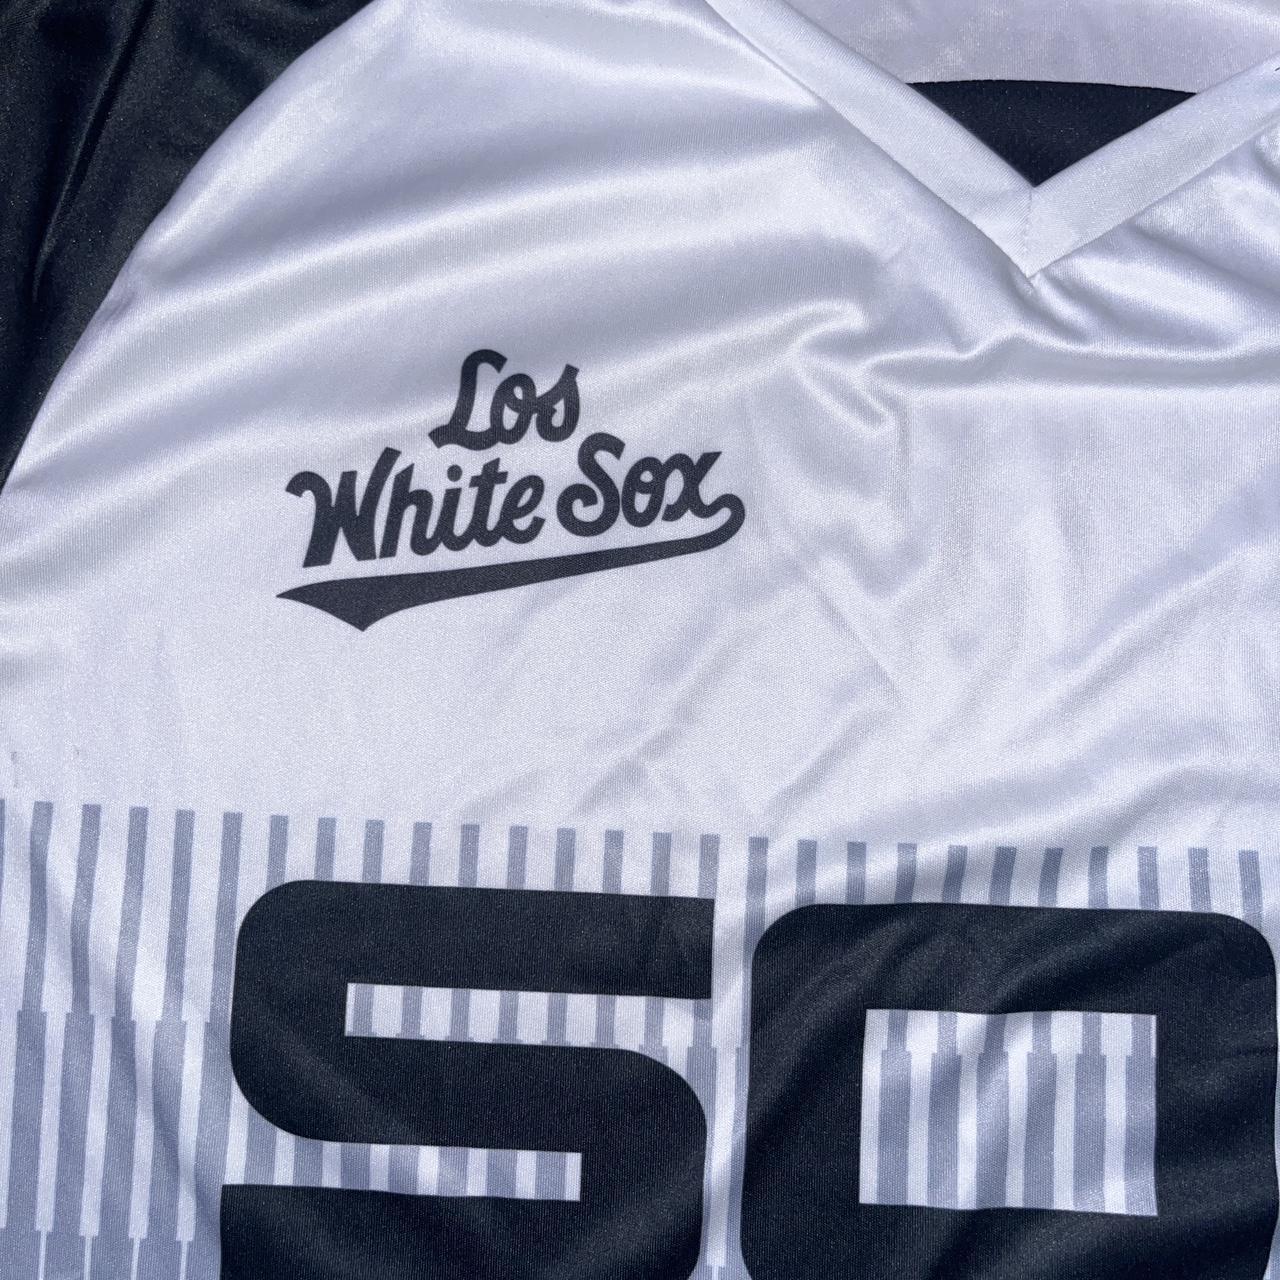 Chicago White Sox “Los White Sox” soccer - Depop